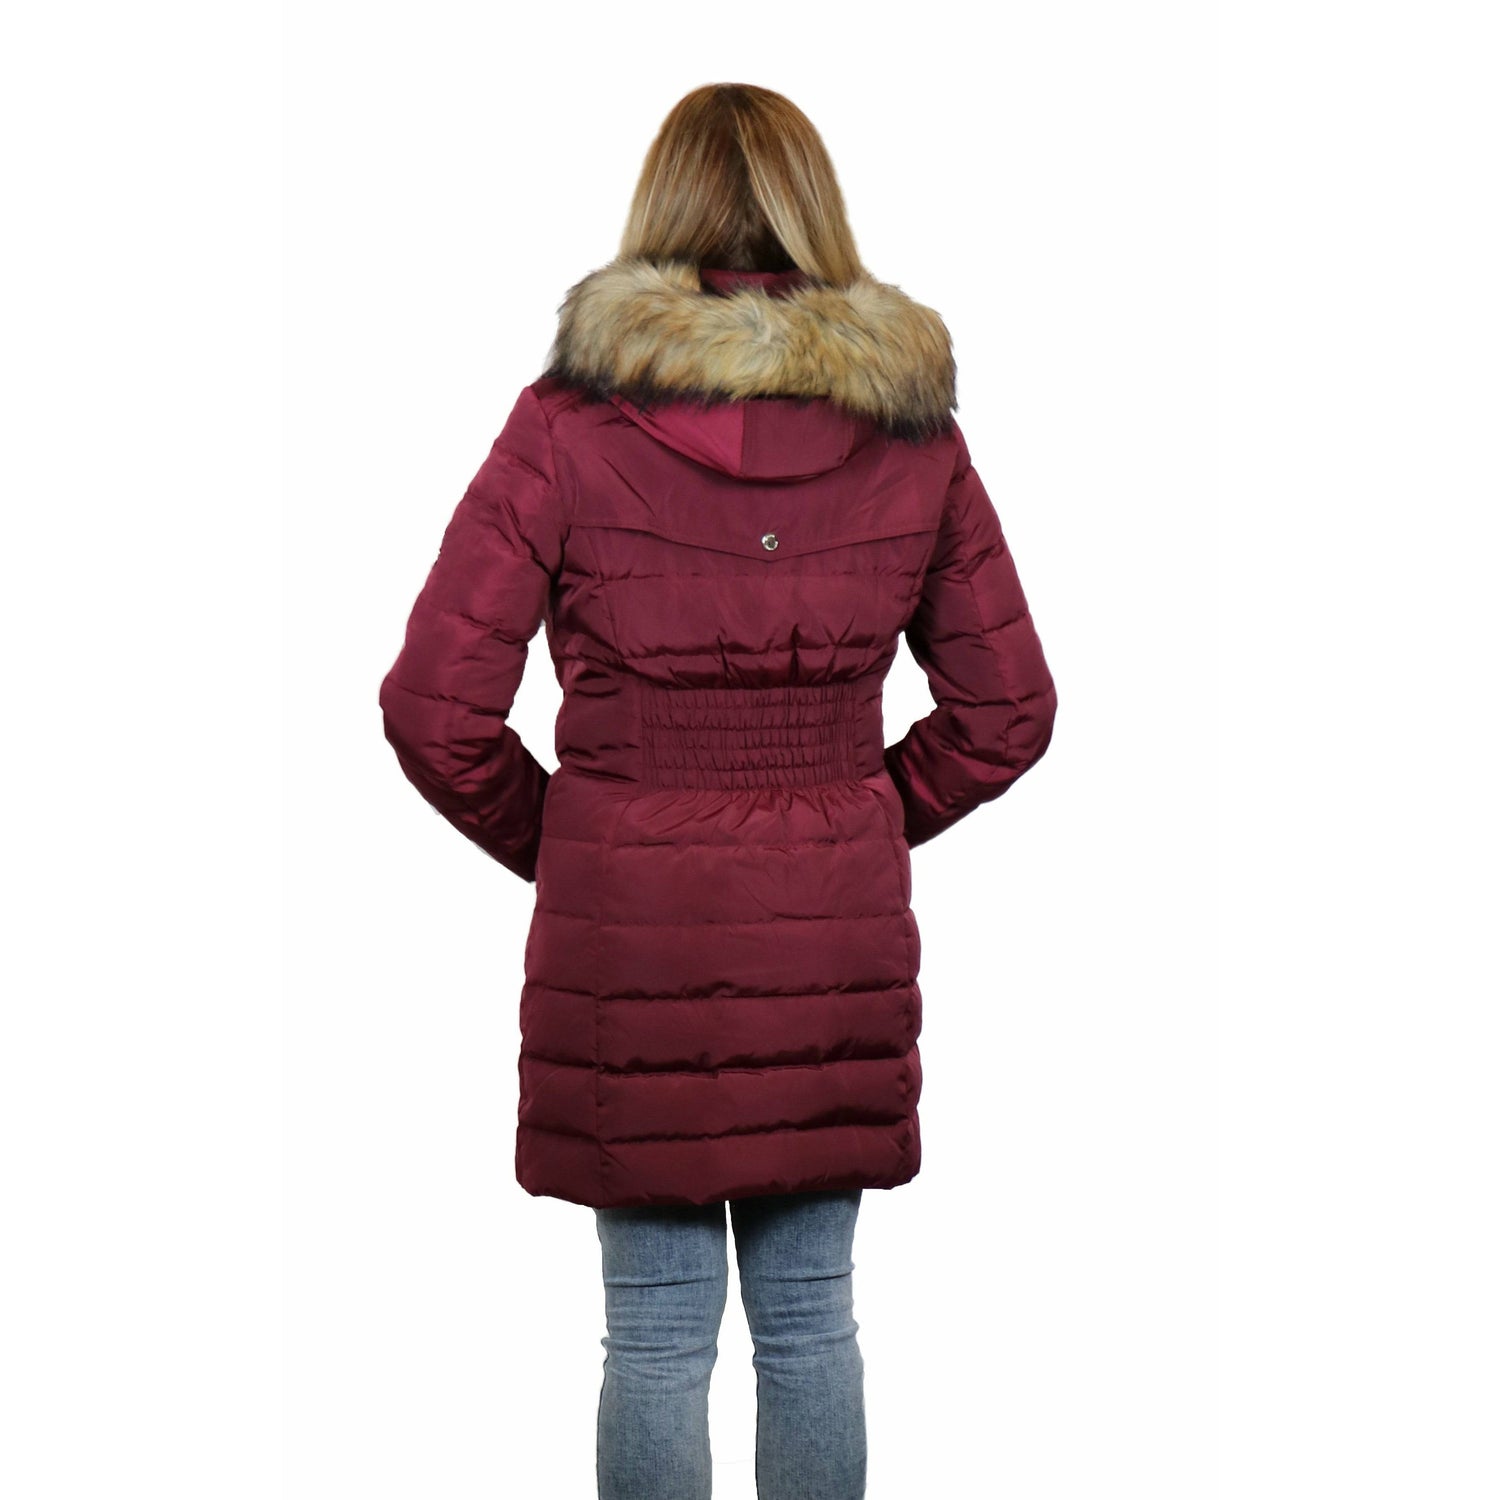 Michael Kors Women's Puffer Down Winter Coat